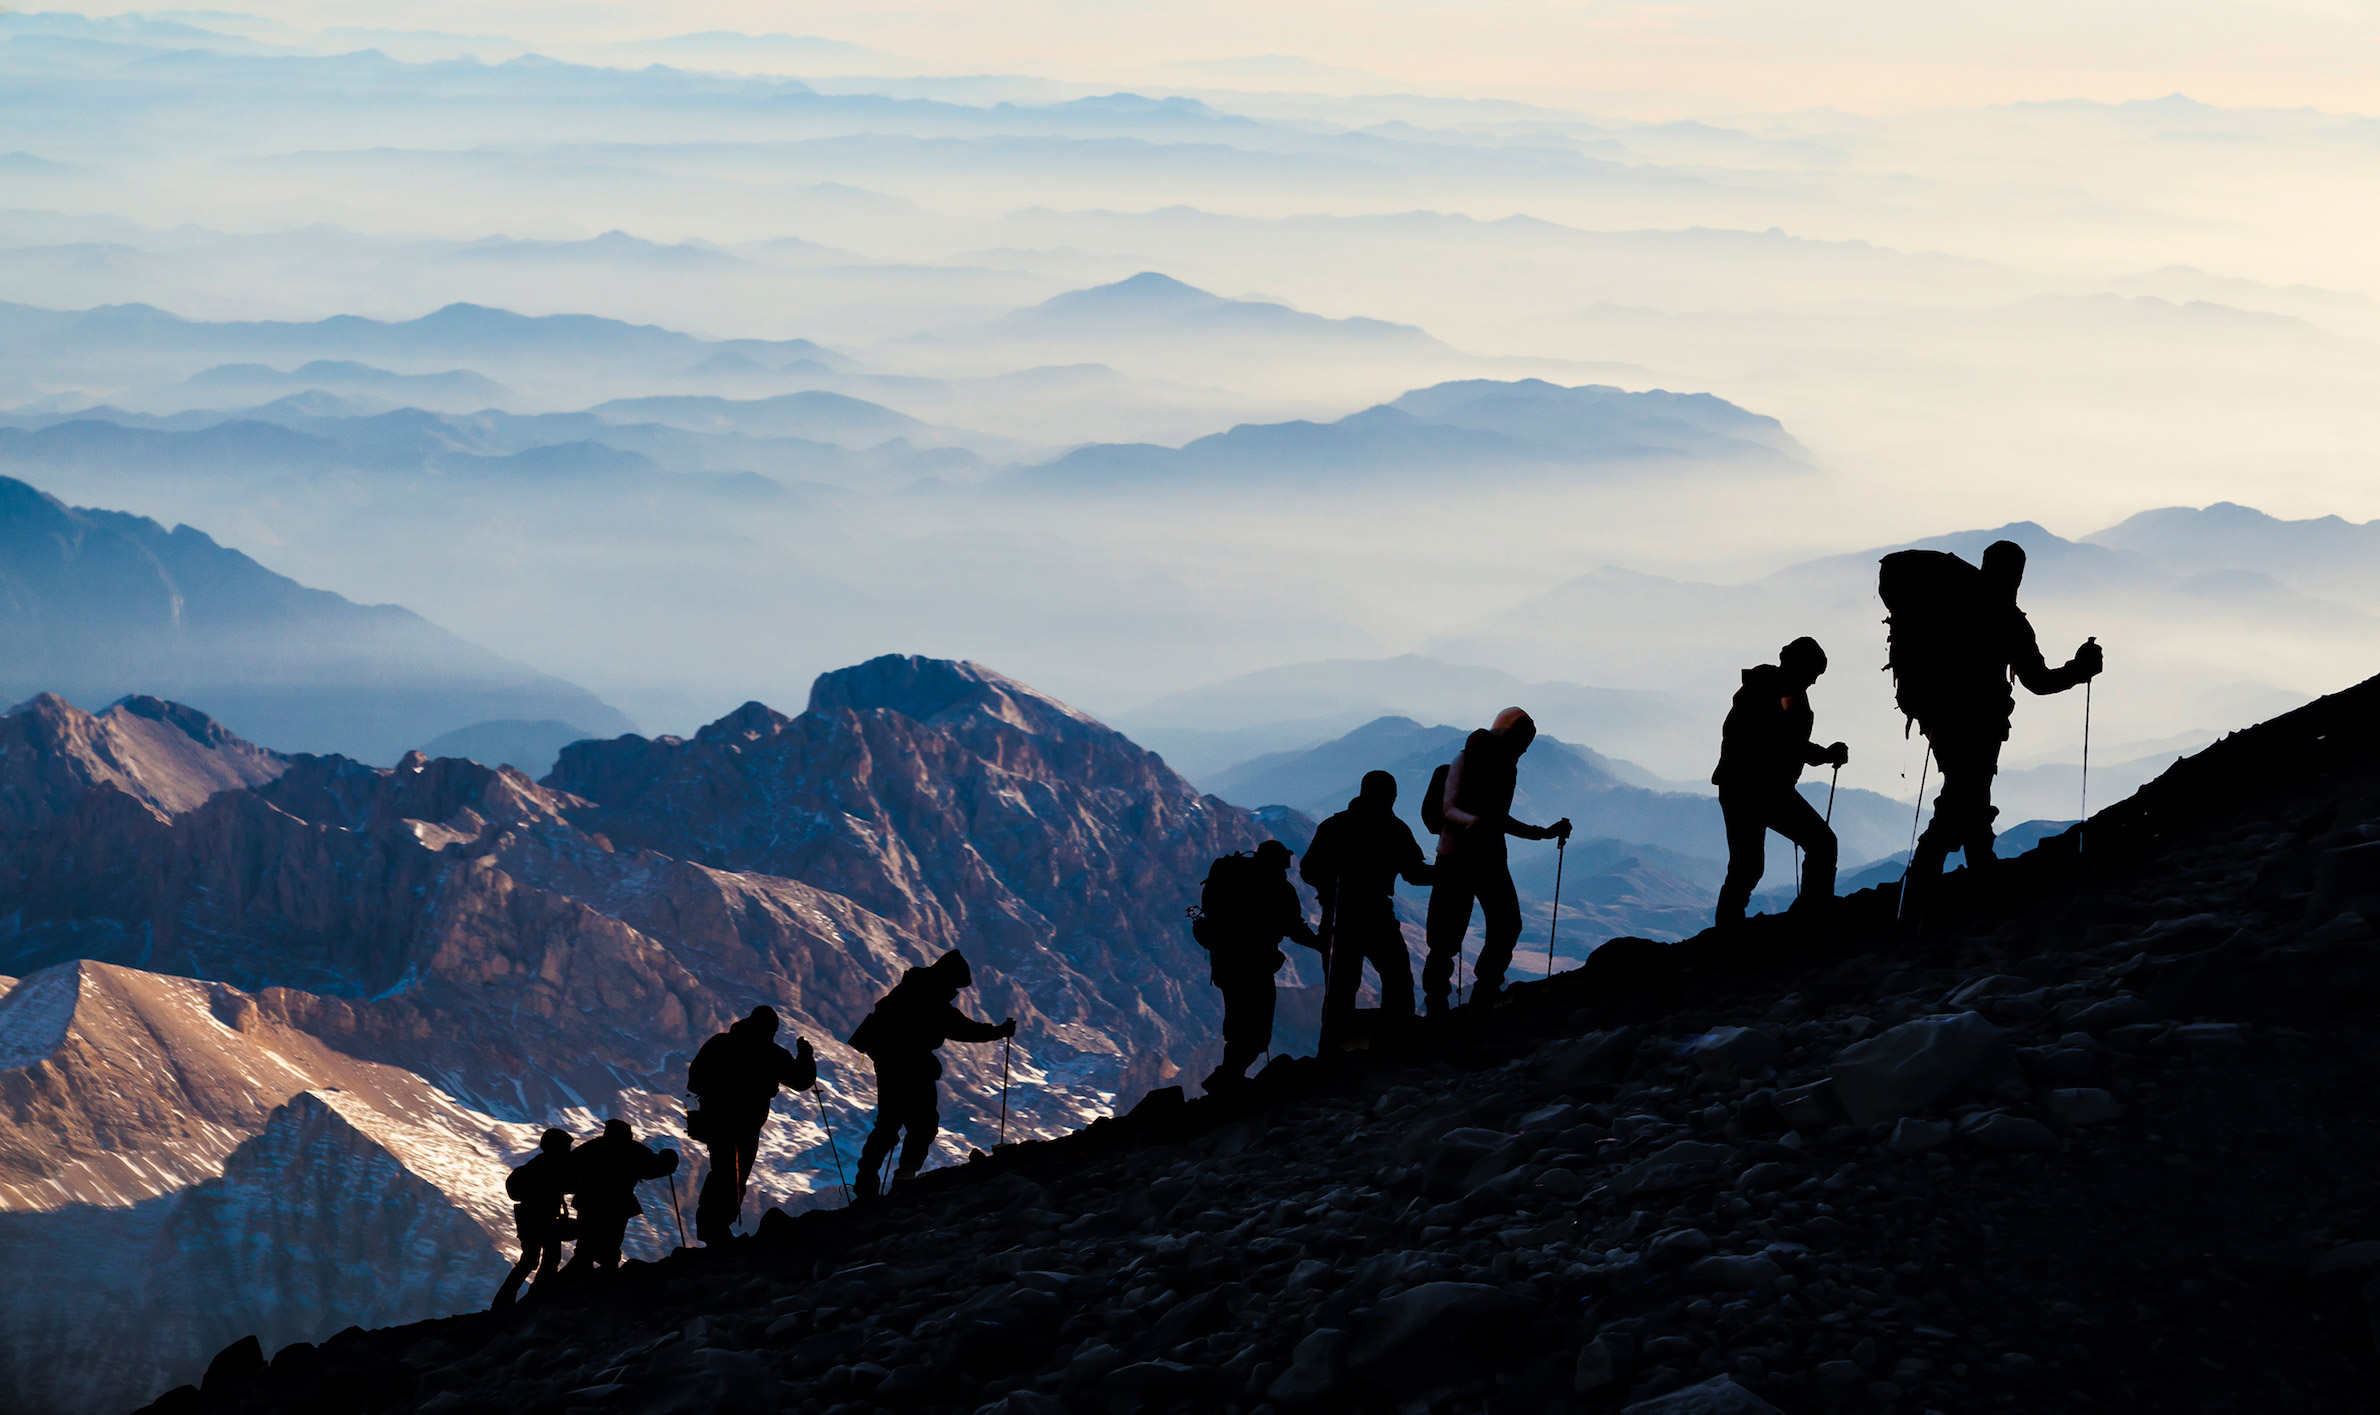 8 people hiking a mountain